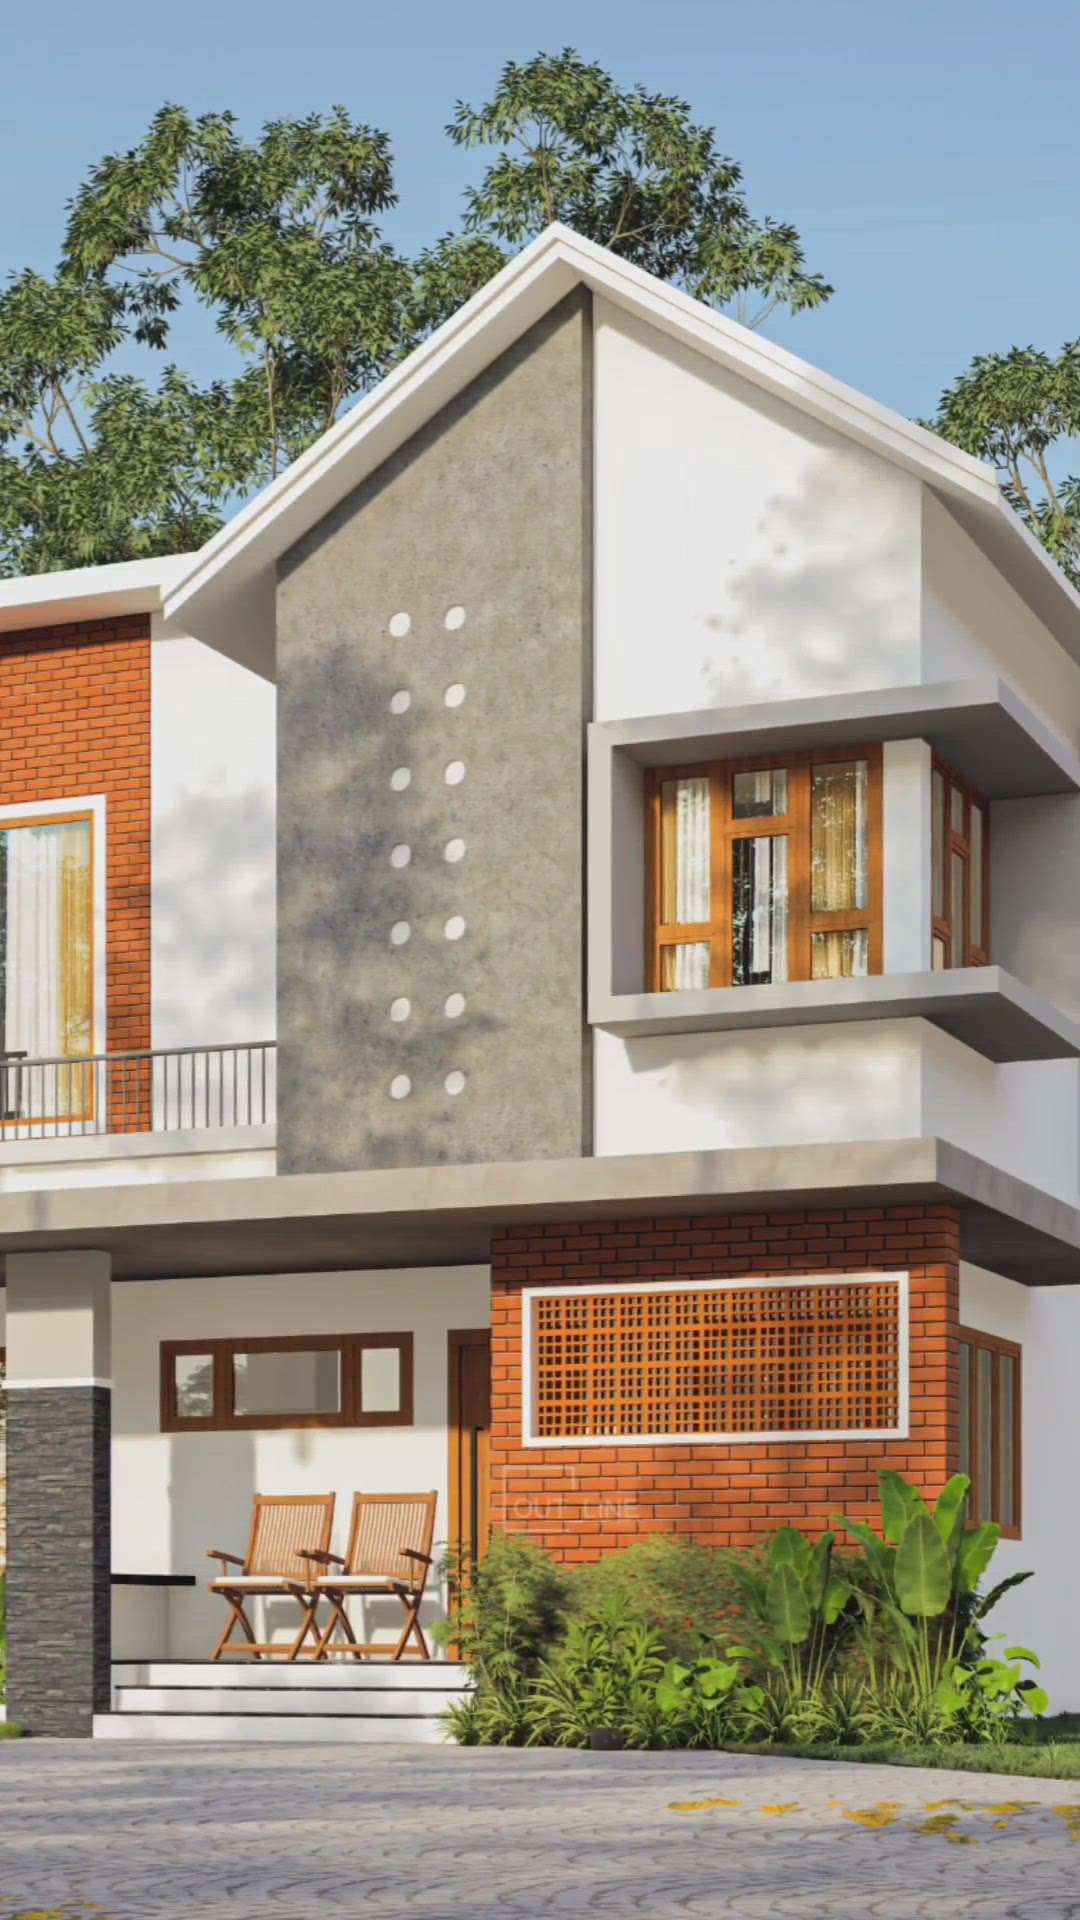 Follow for more 
8136-865-456 @outline__architects 

#keralagram #architecture #keralahouseplans #homedecoration #keralahomestay #keralahomes #homestyle #calicut #malappuram #kannur #kasaragod #trivandrum #wayanad #alappuzha #keralagodsowncountry #keralahousedesign #kerala #keralahomes #kollam #palakkad #kotayam 

Planning-designing-visualizing
Consulting-construction